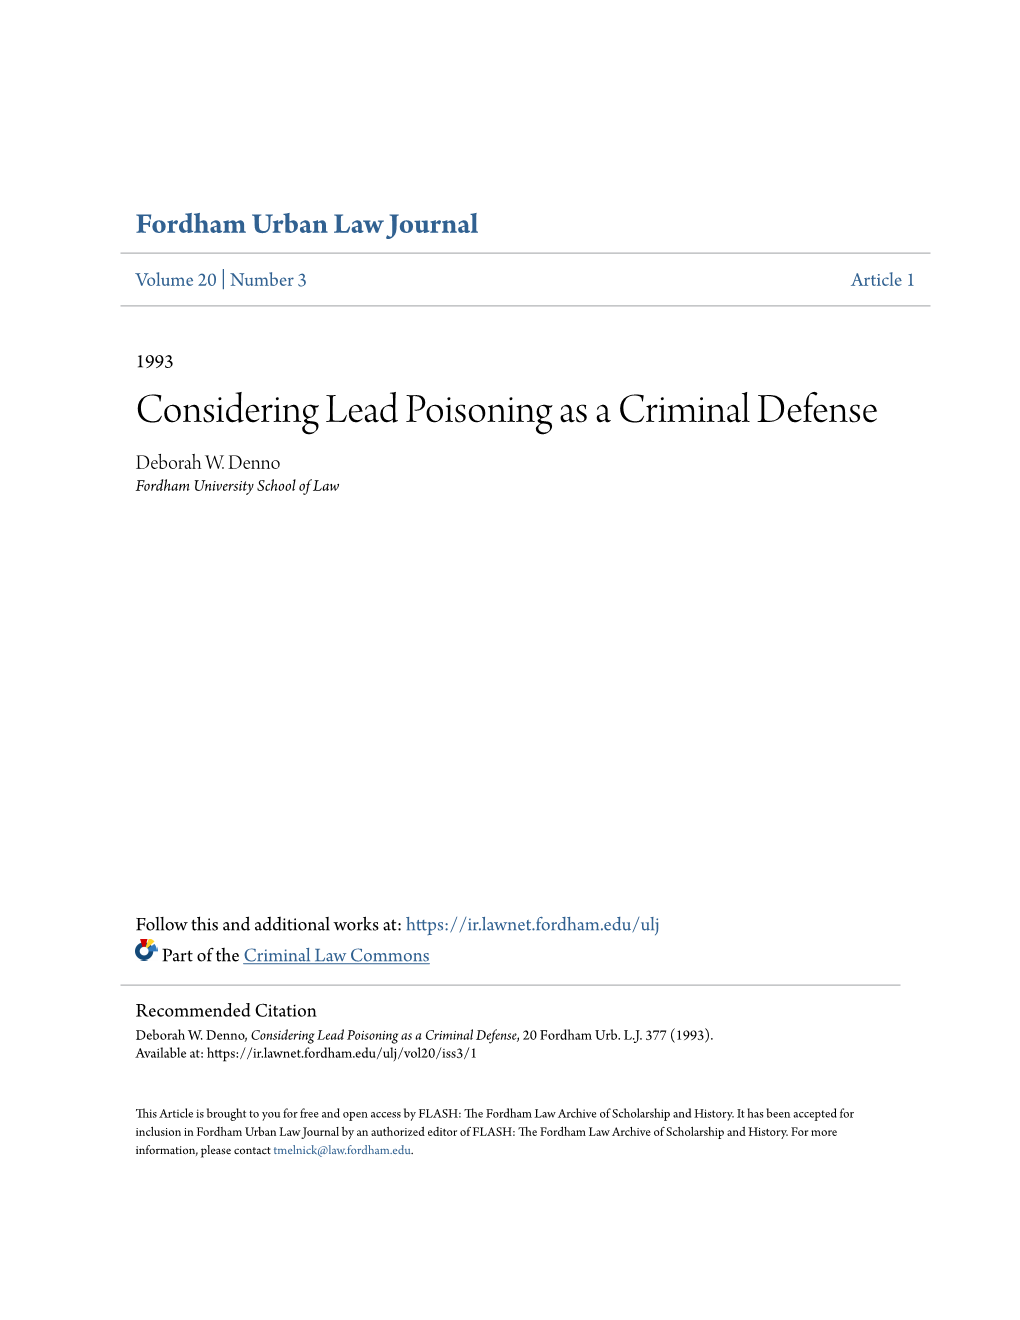 Considering Lead Poisoning As a Criminal Defense Deborah W